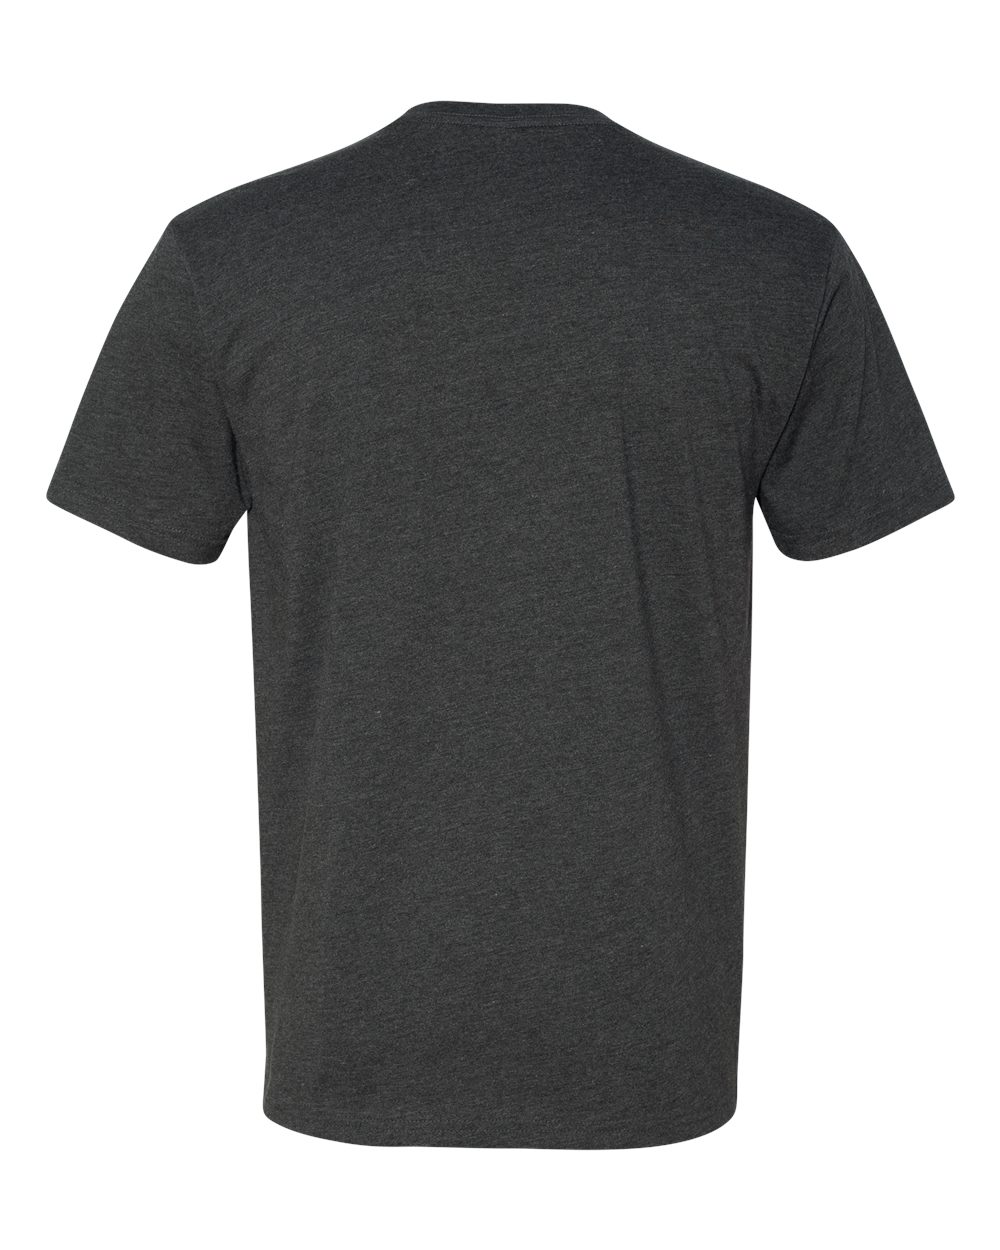 Back of dark grey MSU t shirt from Nudge Printing